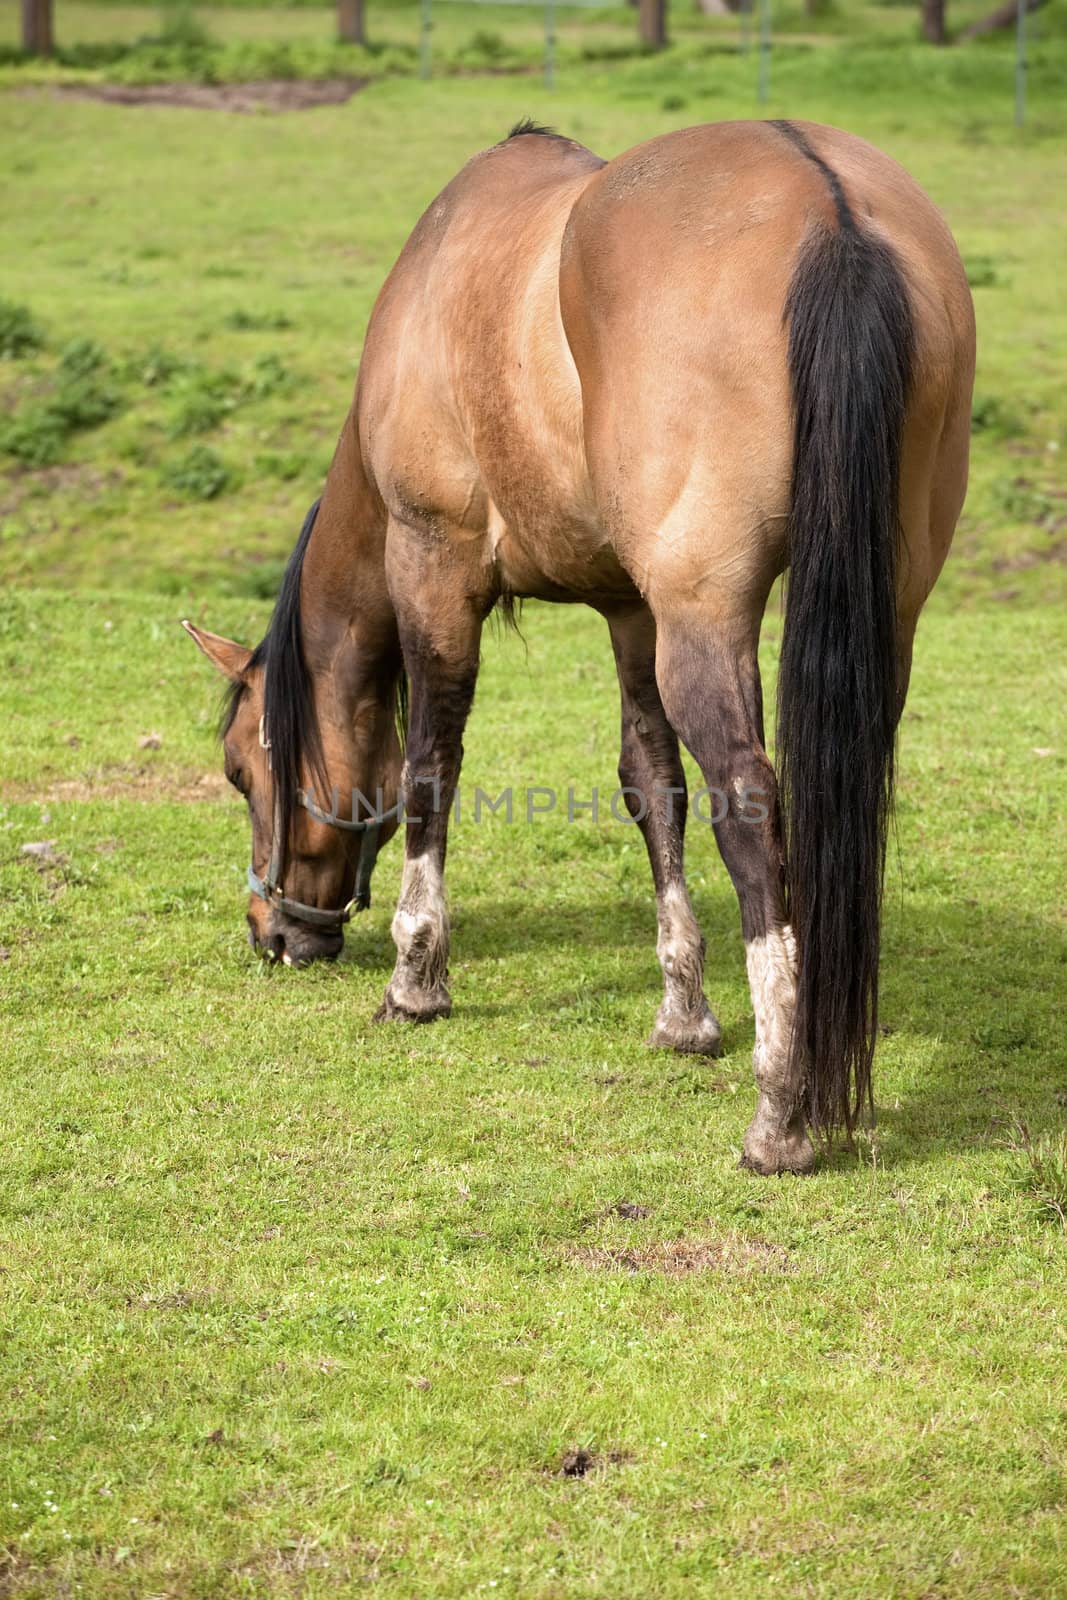 Grazing horse in a field, Woodland WA.